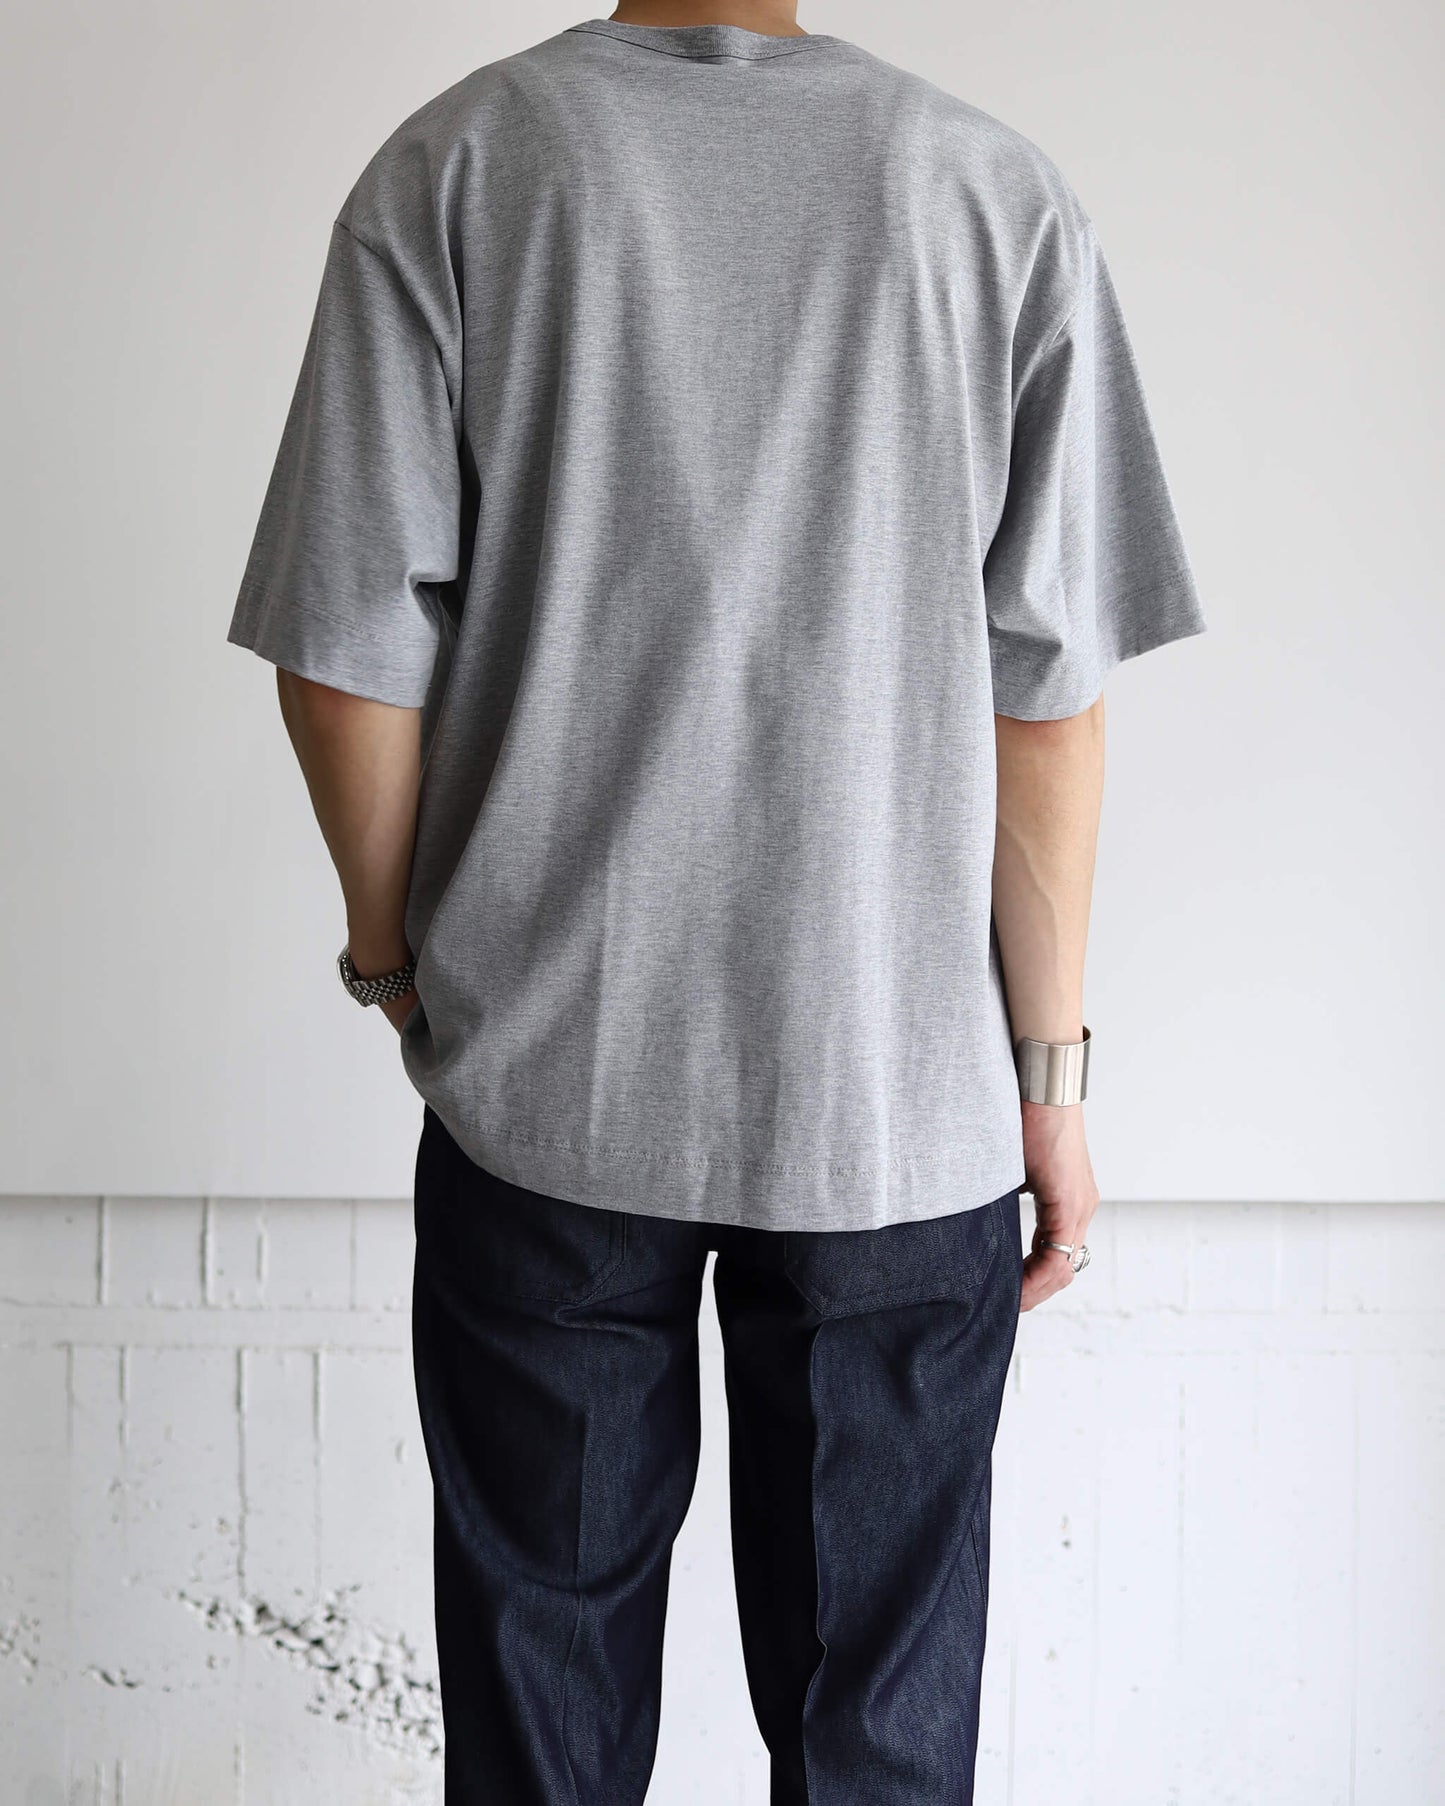 28G Tenjiku - O.G T-shirt "Top grey"